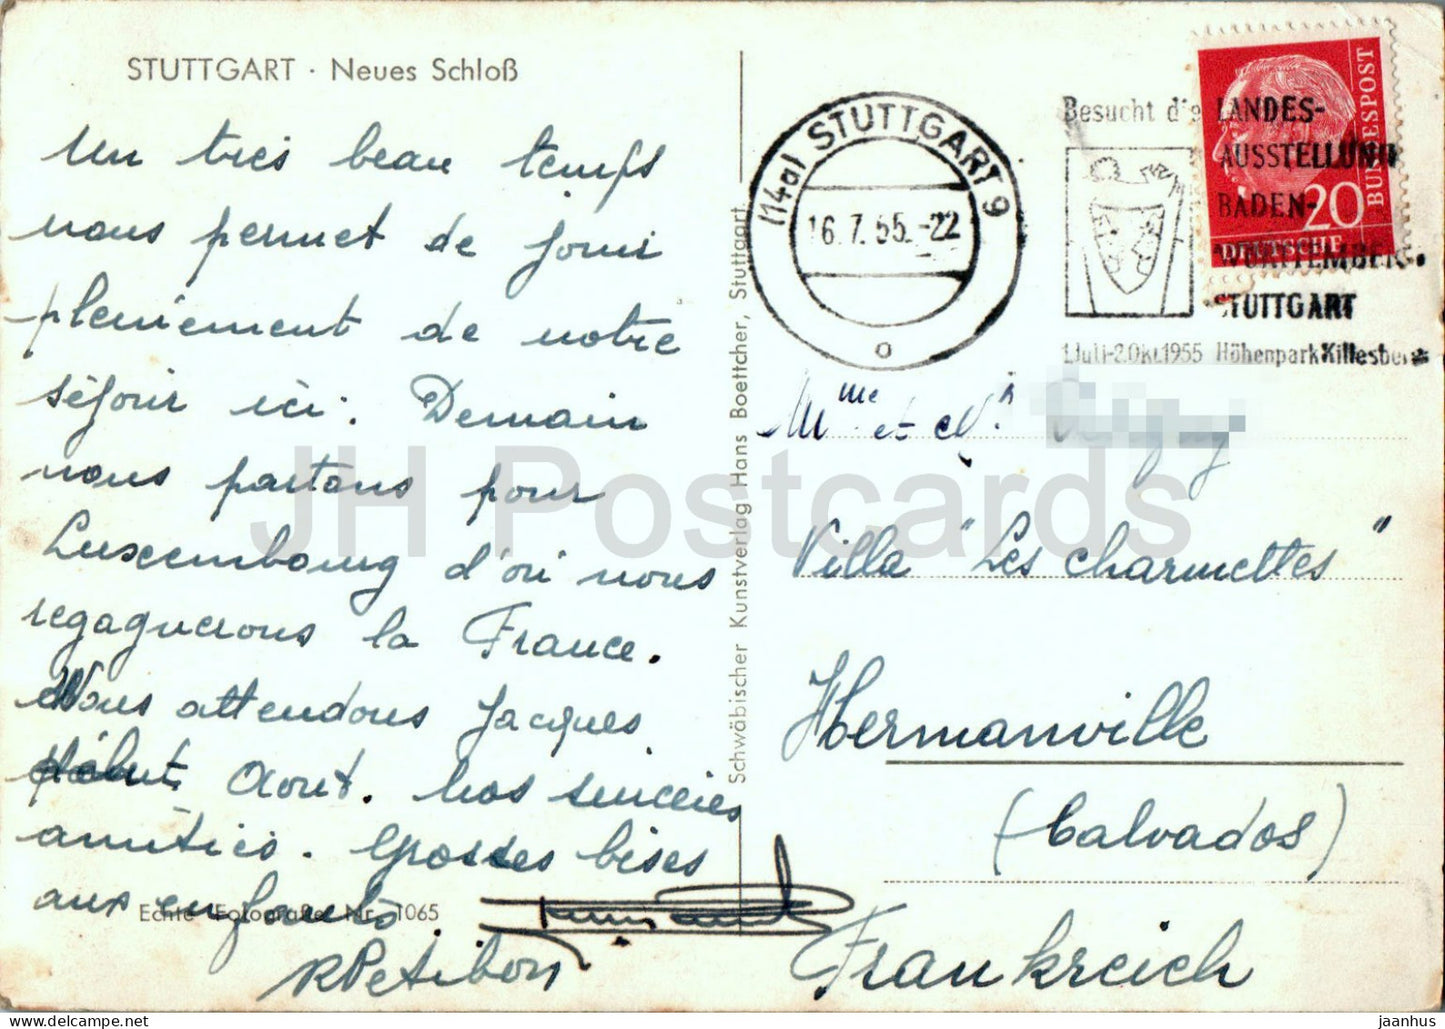 Stuttgart - Neues Schloss - 1065 - carte postale ancienne - 1955 - Allemagne - utilisé 